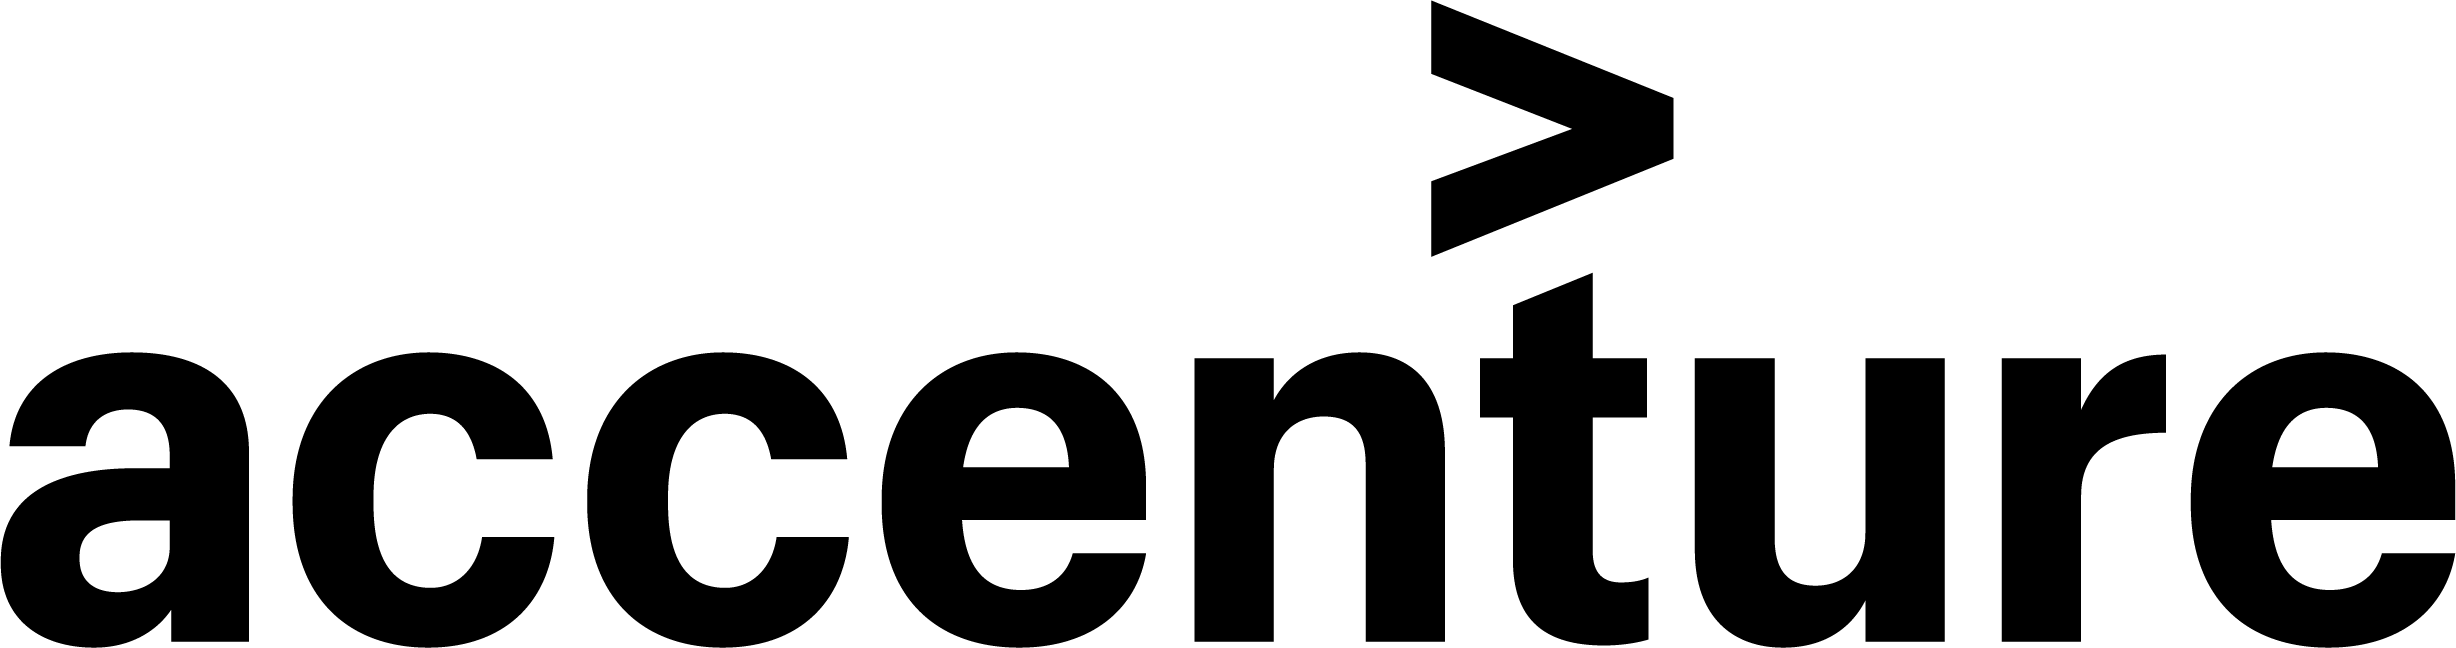 Accenture Logo PNG Clipart